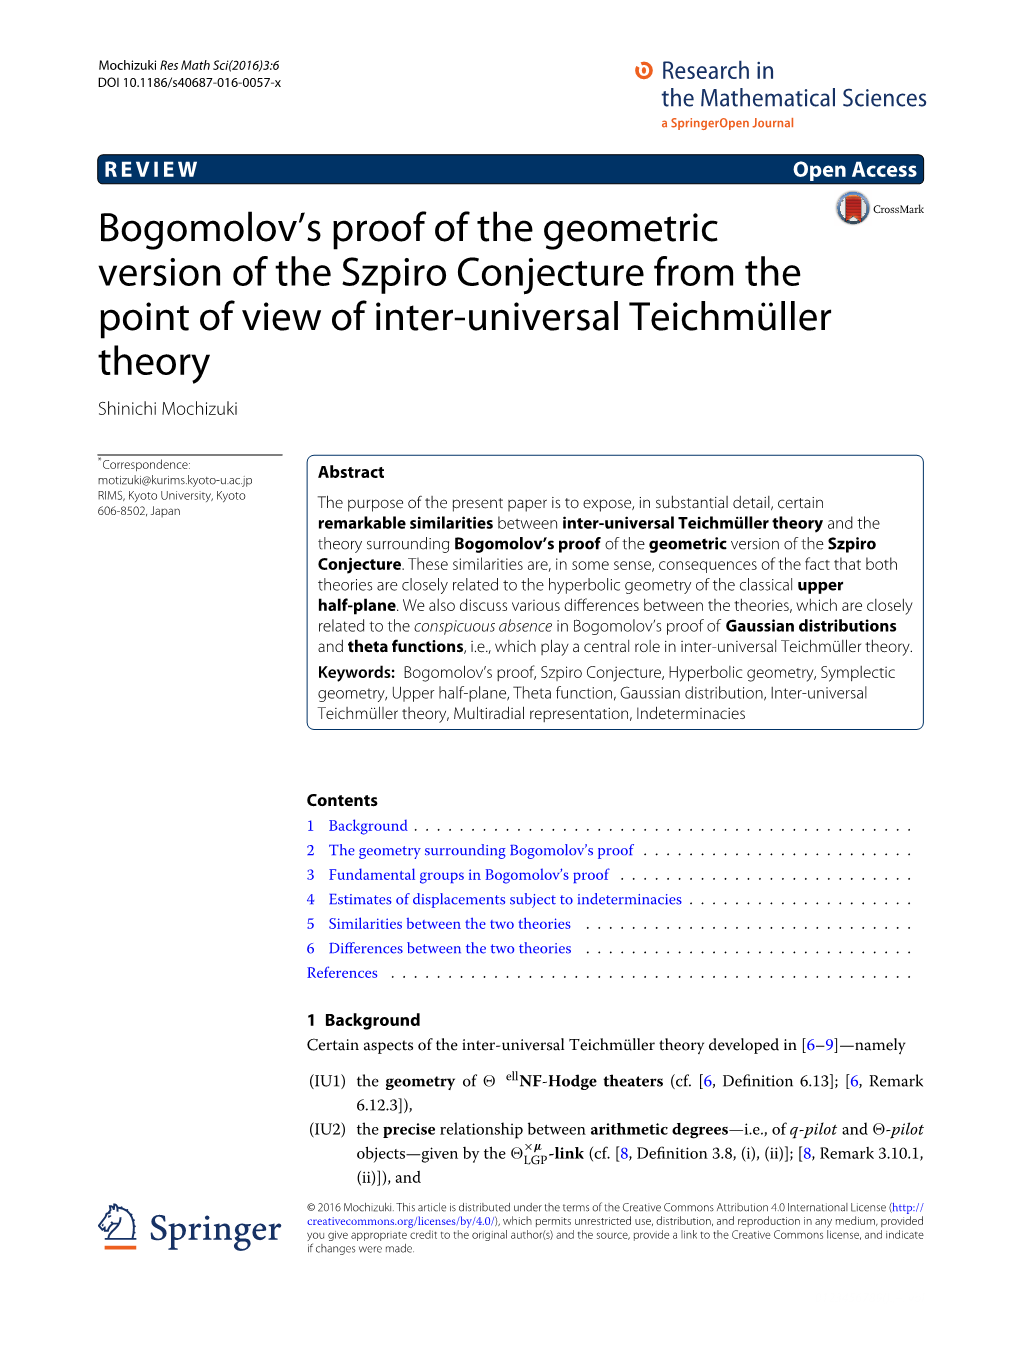 Bogomolov's Proof of the Geometric Version of the Szpiro Conjecture